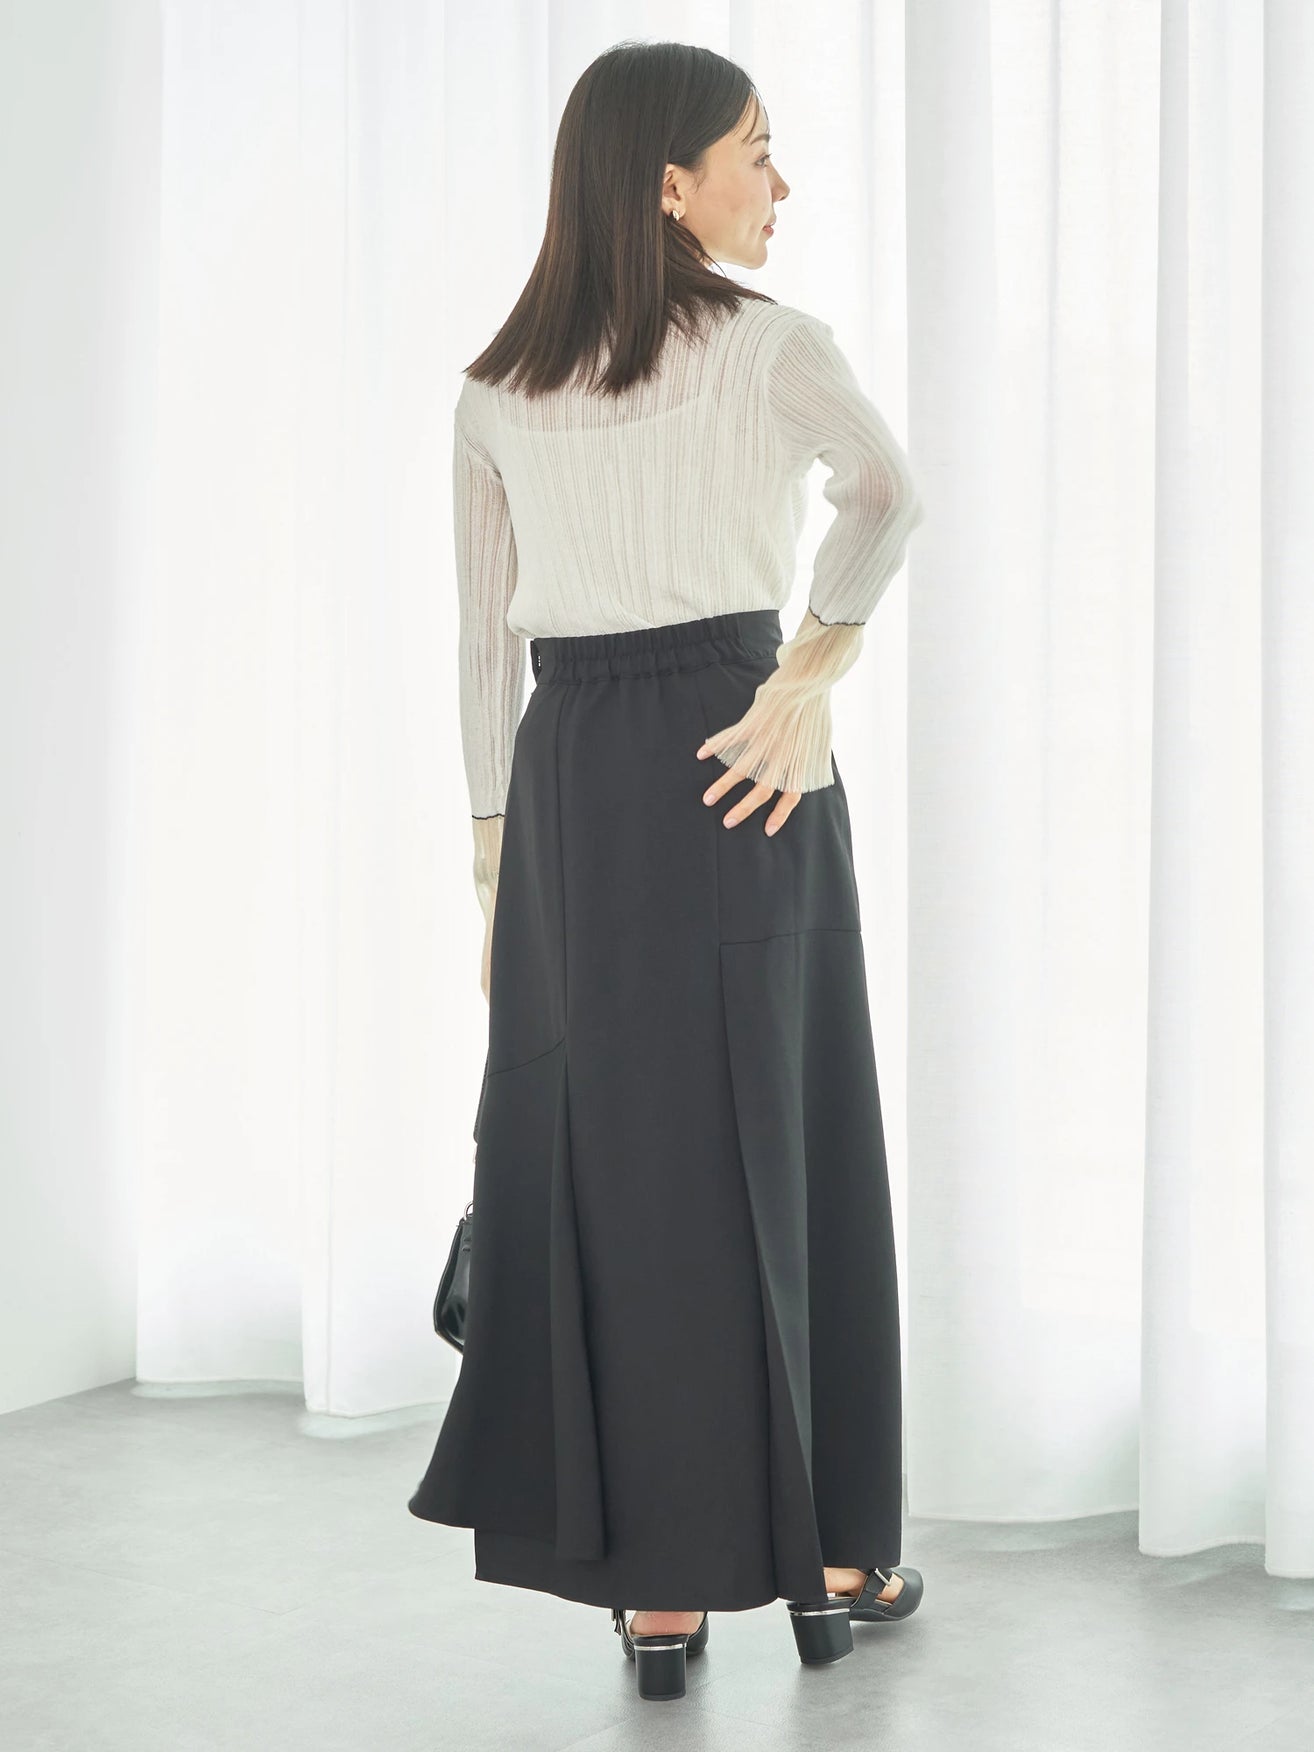 Takashi Asymmetrical Cut-Out Skirt